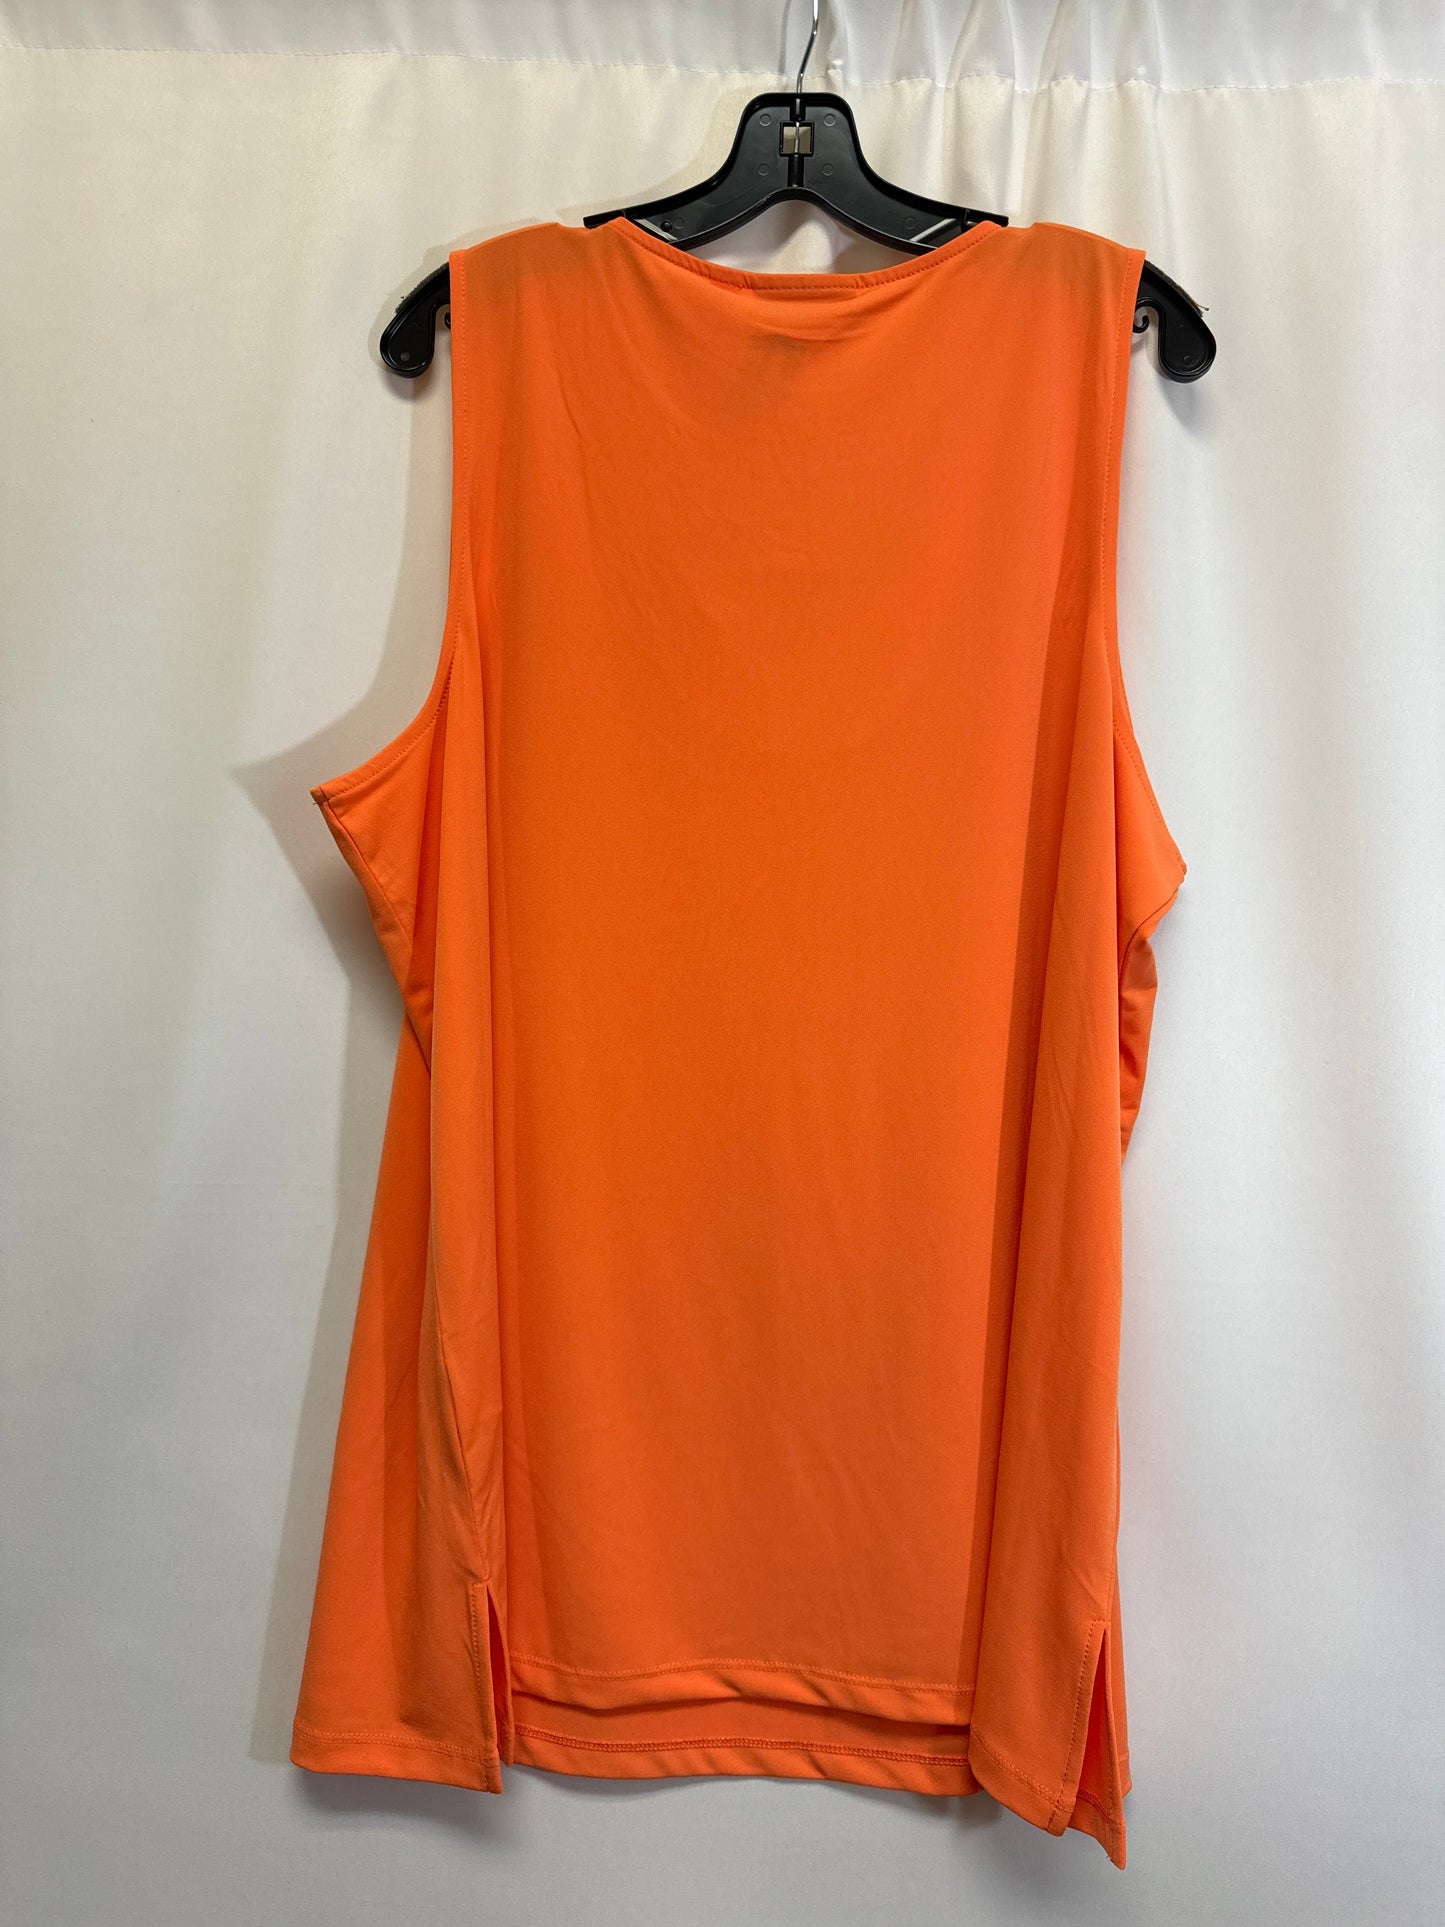 Orange Top Sleeveless Susan Graver, Size 2x